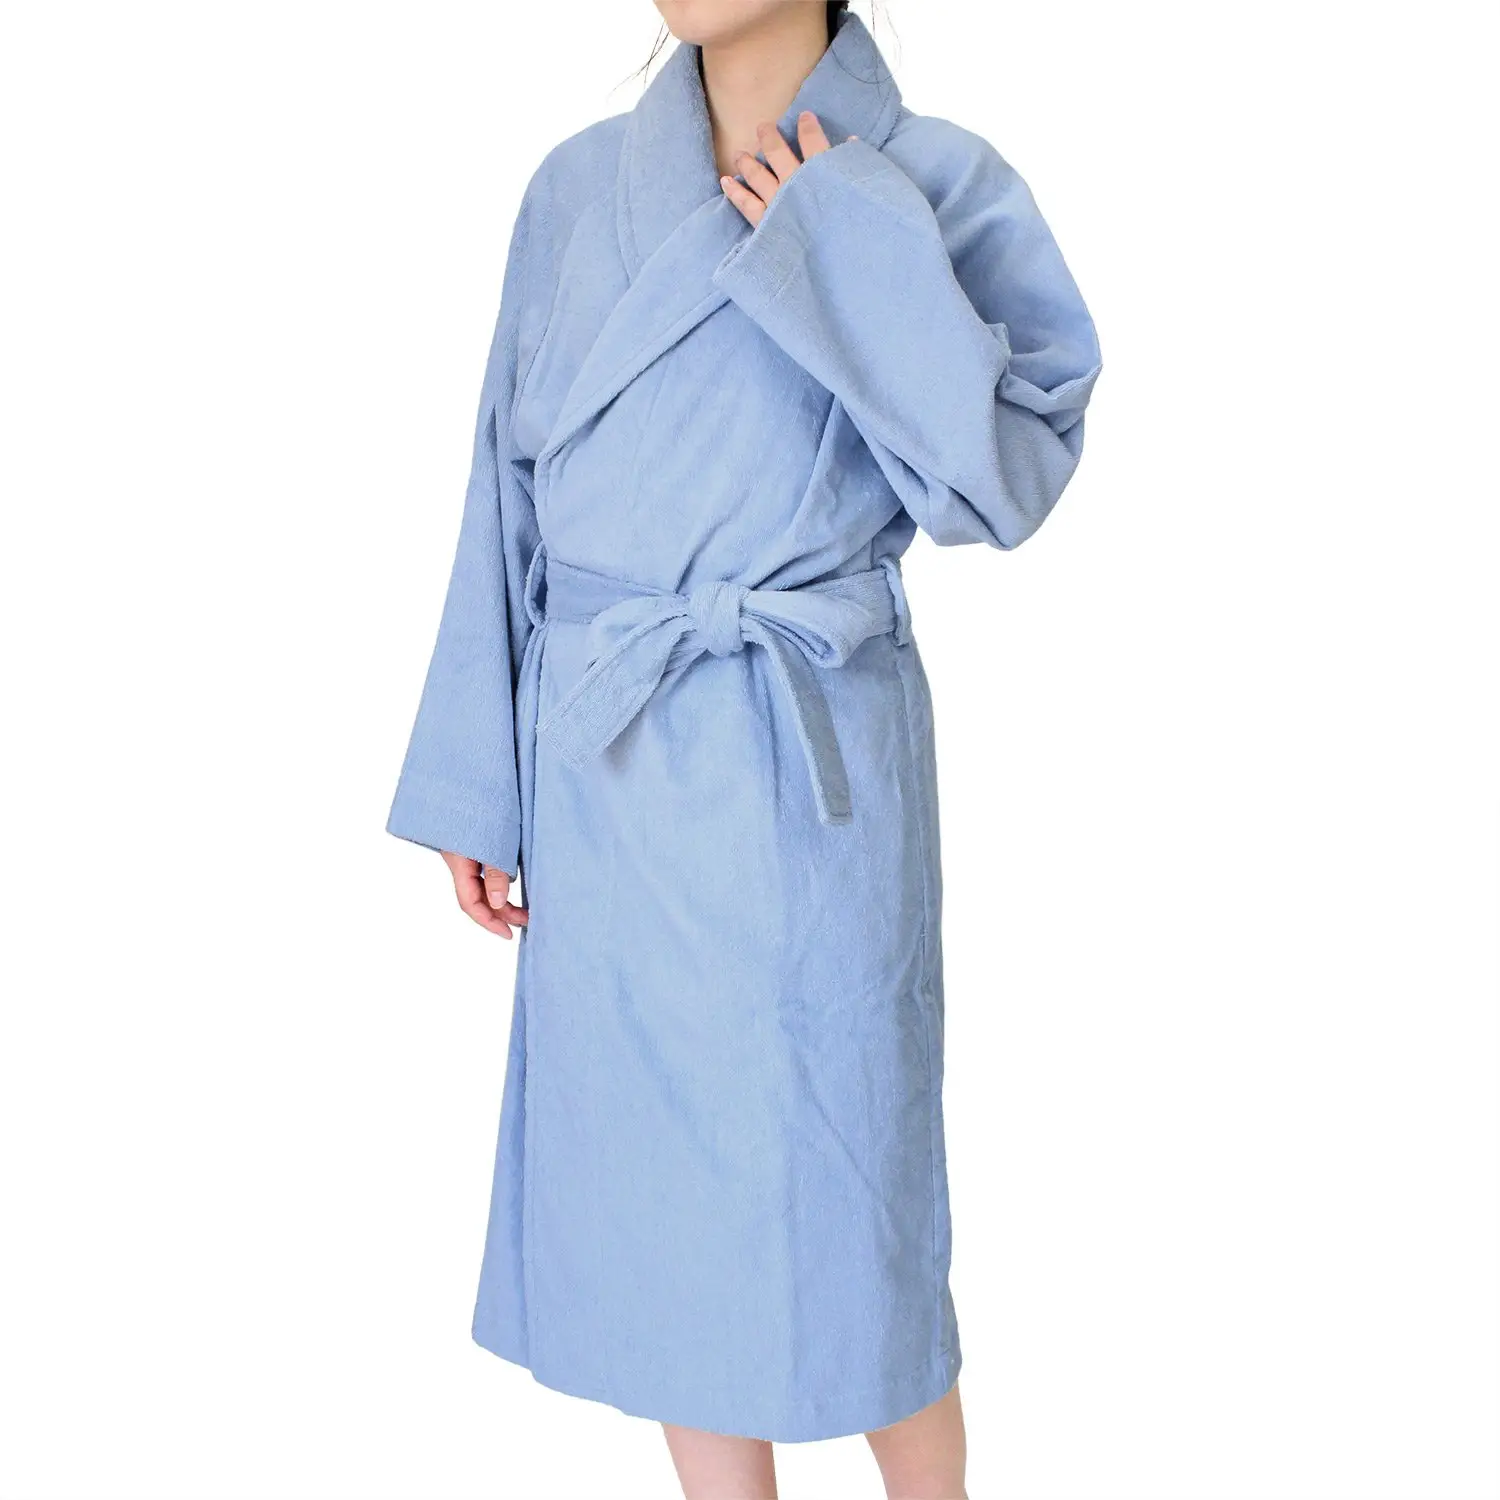 Cotton towel bath robe 109cm * 57cm unisex made in Japan terry cloth bath robe Hotel blue